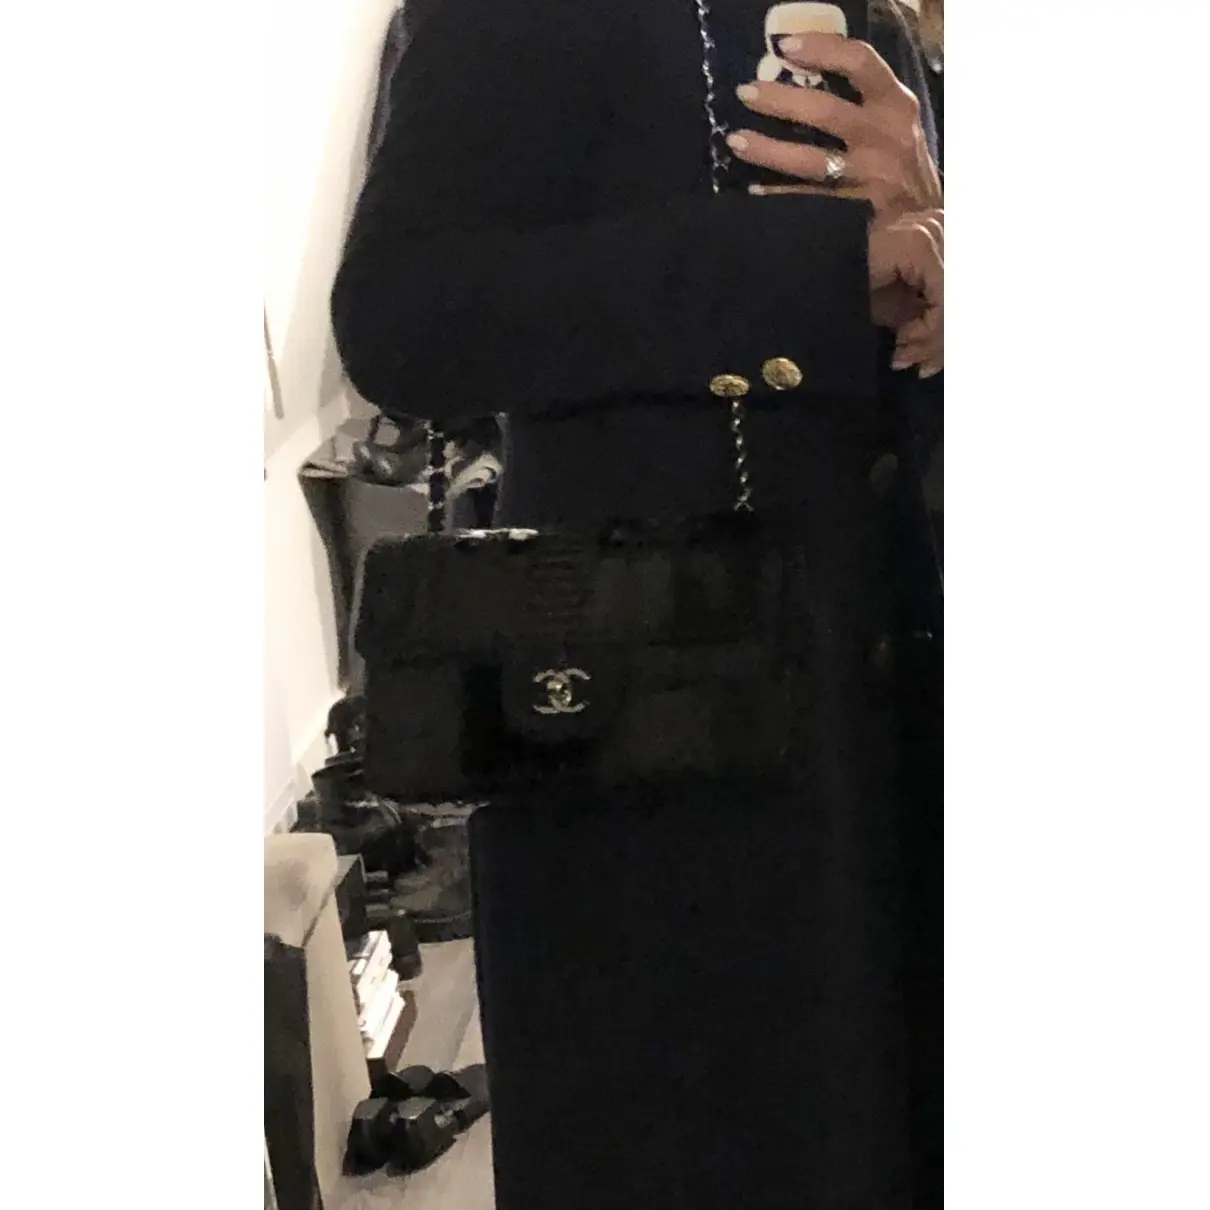 Timeless/Classique tweed crossbody bag Chanel